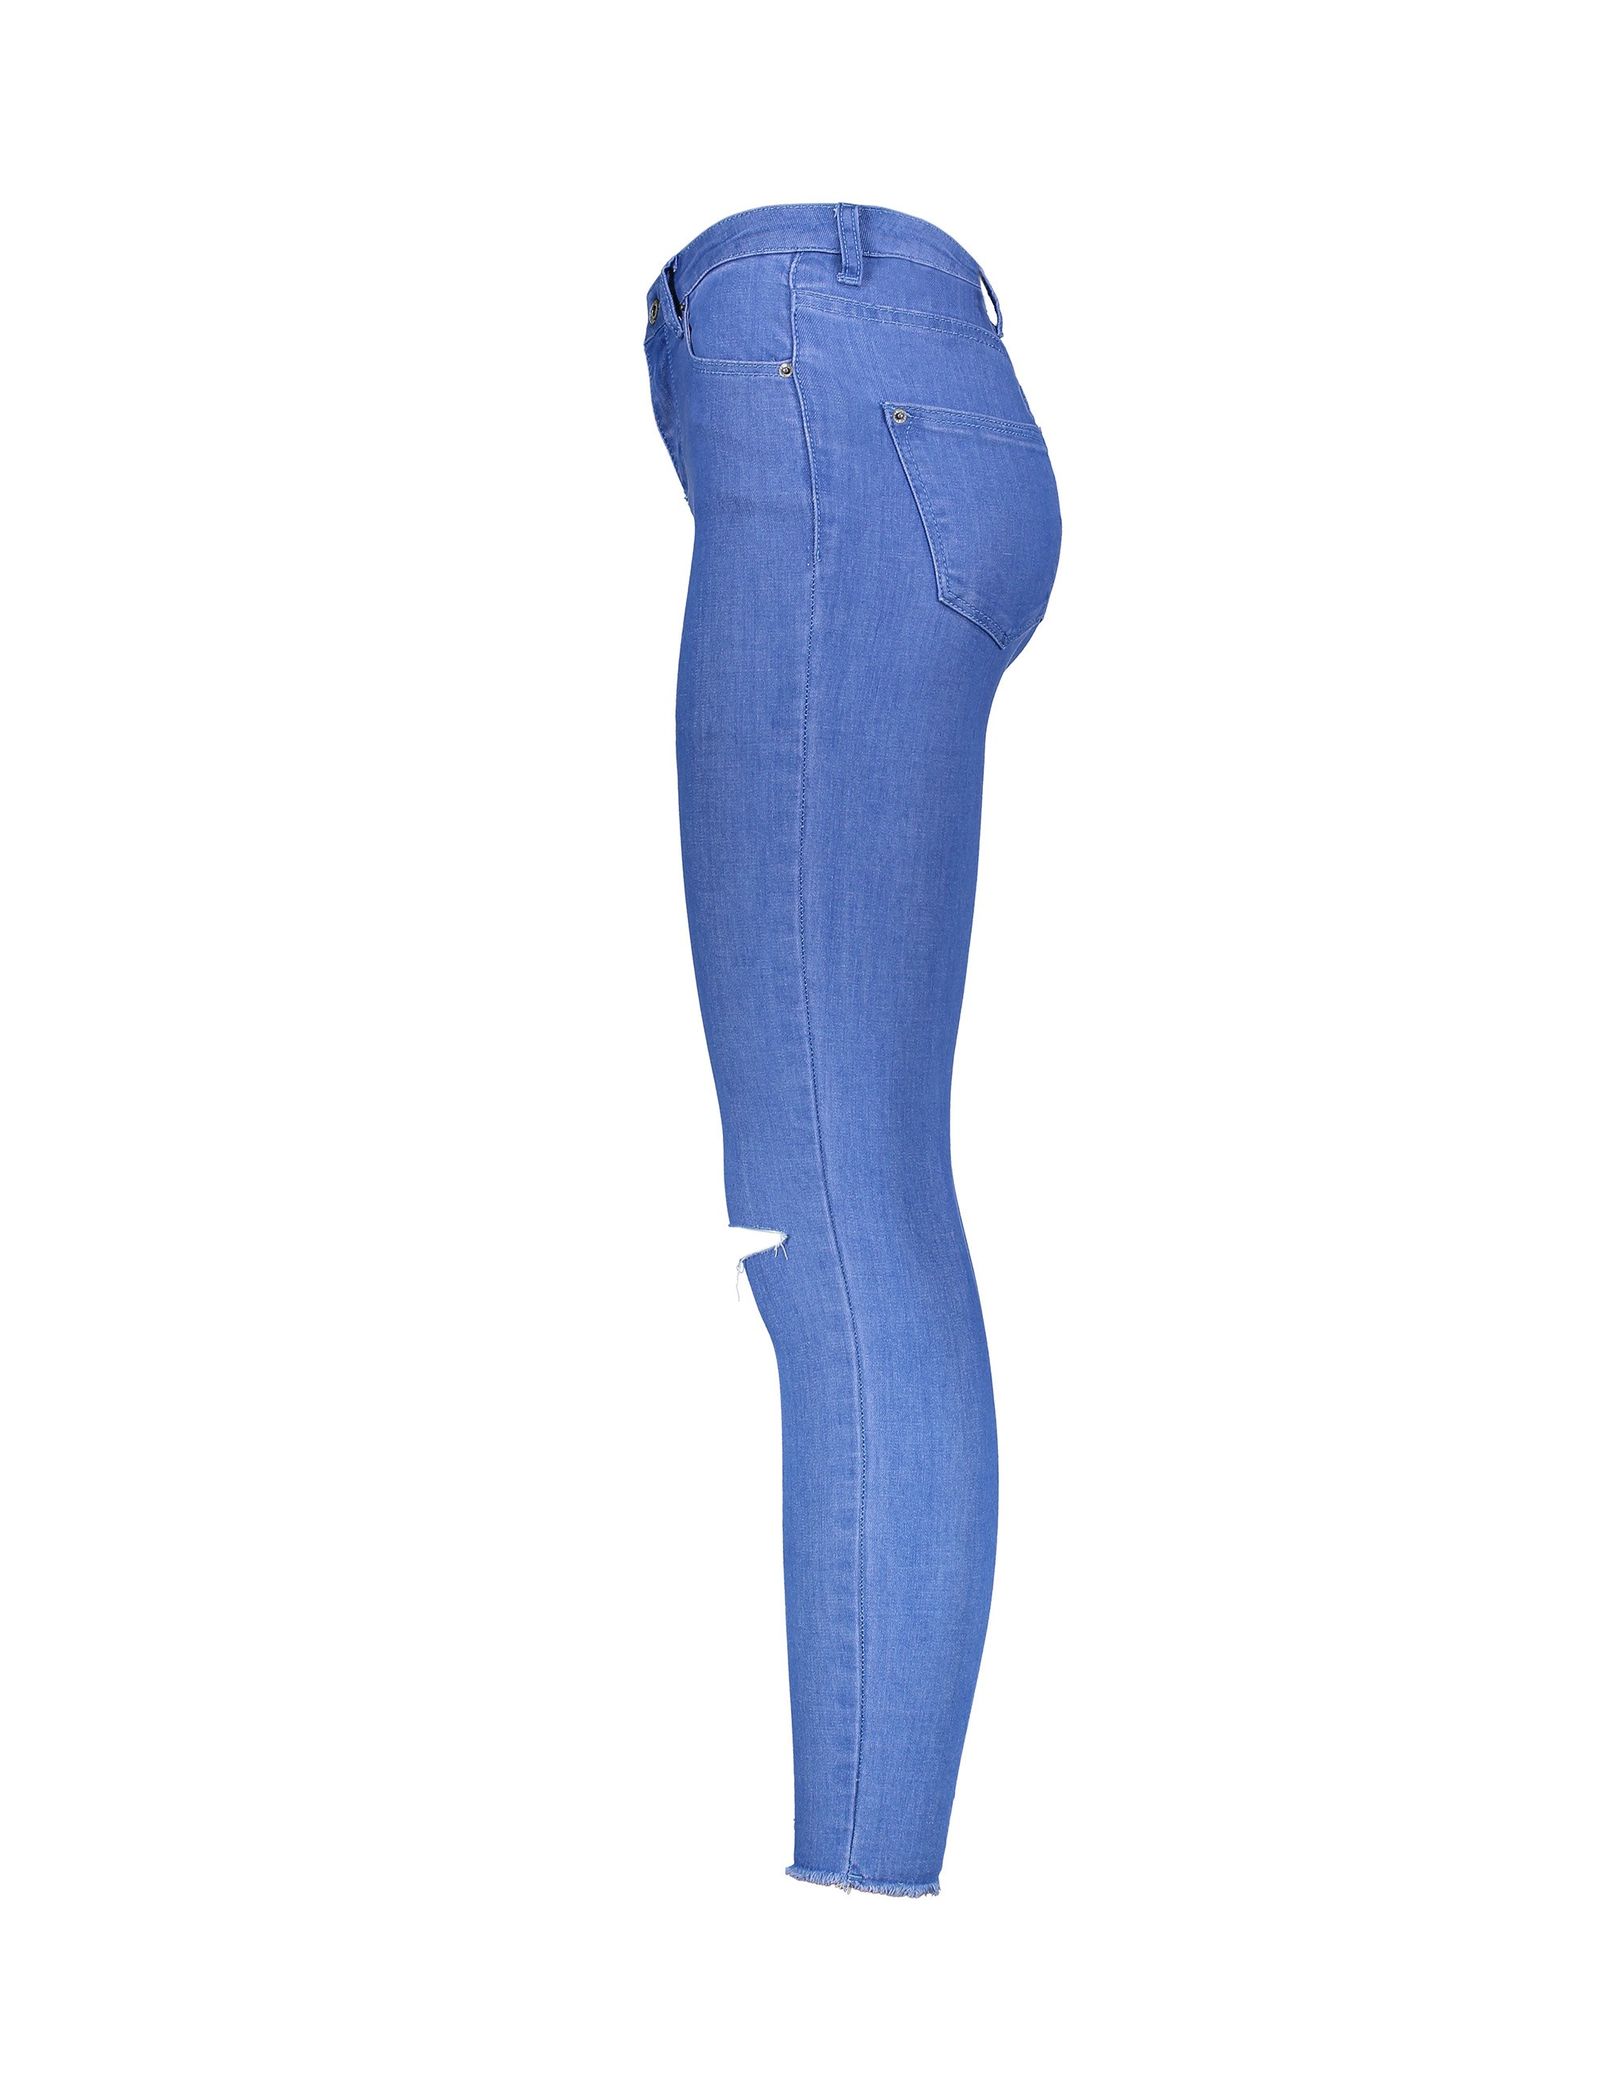 شلوار جین زنانه جنیفر مدل 10009777 - آبی - 3